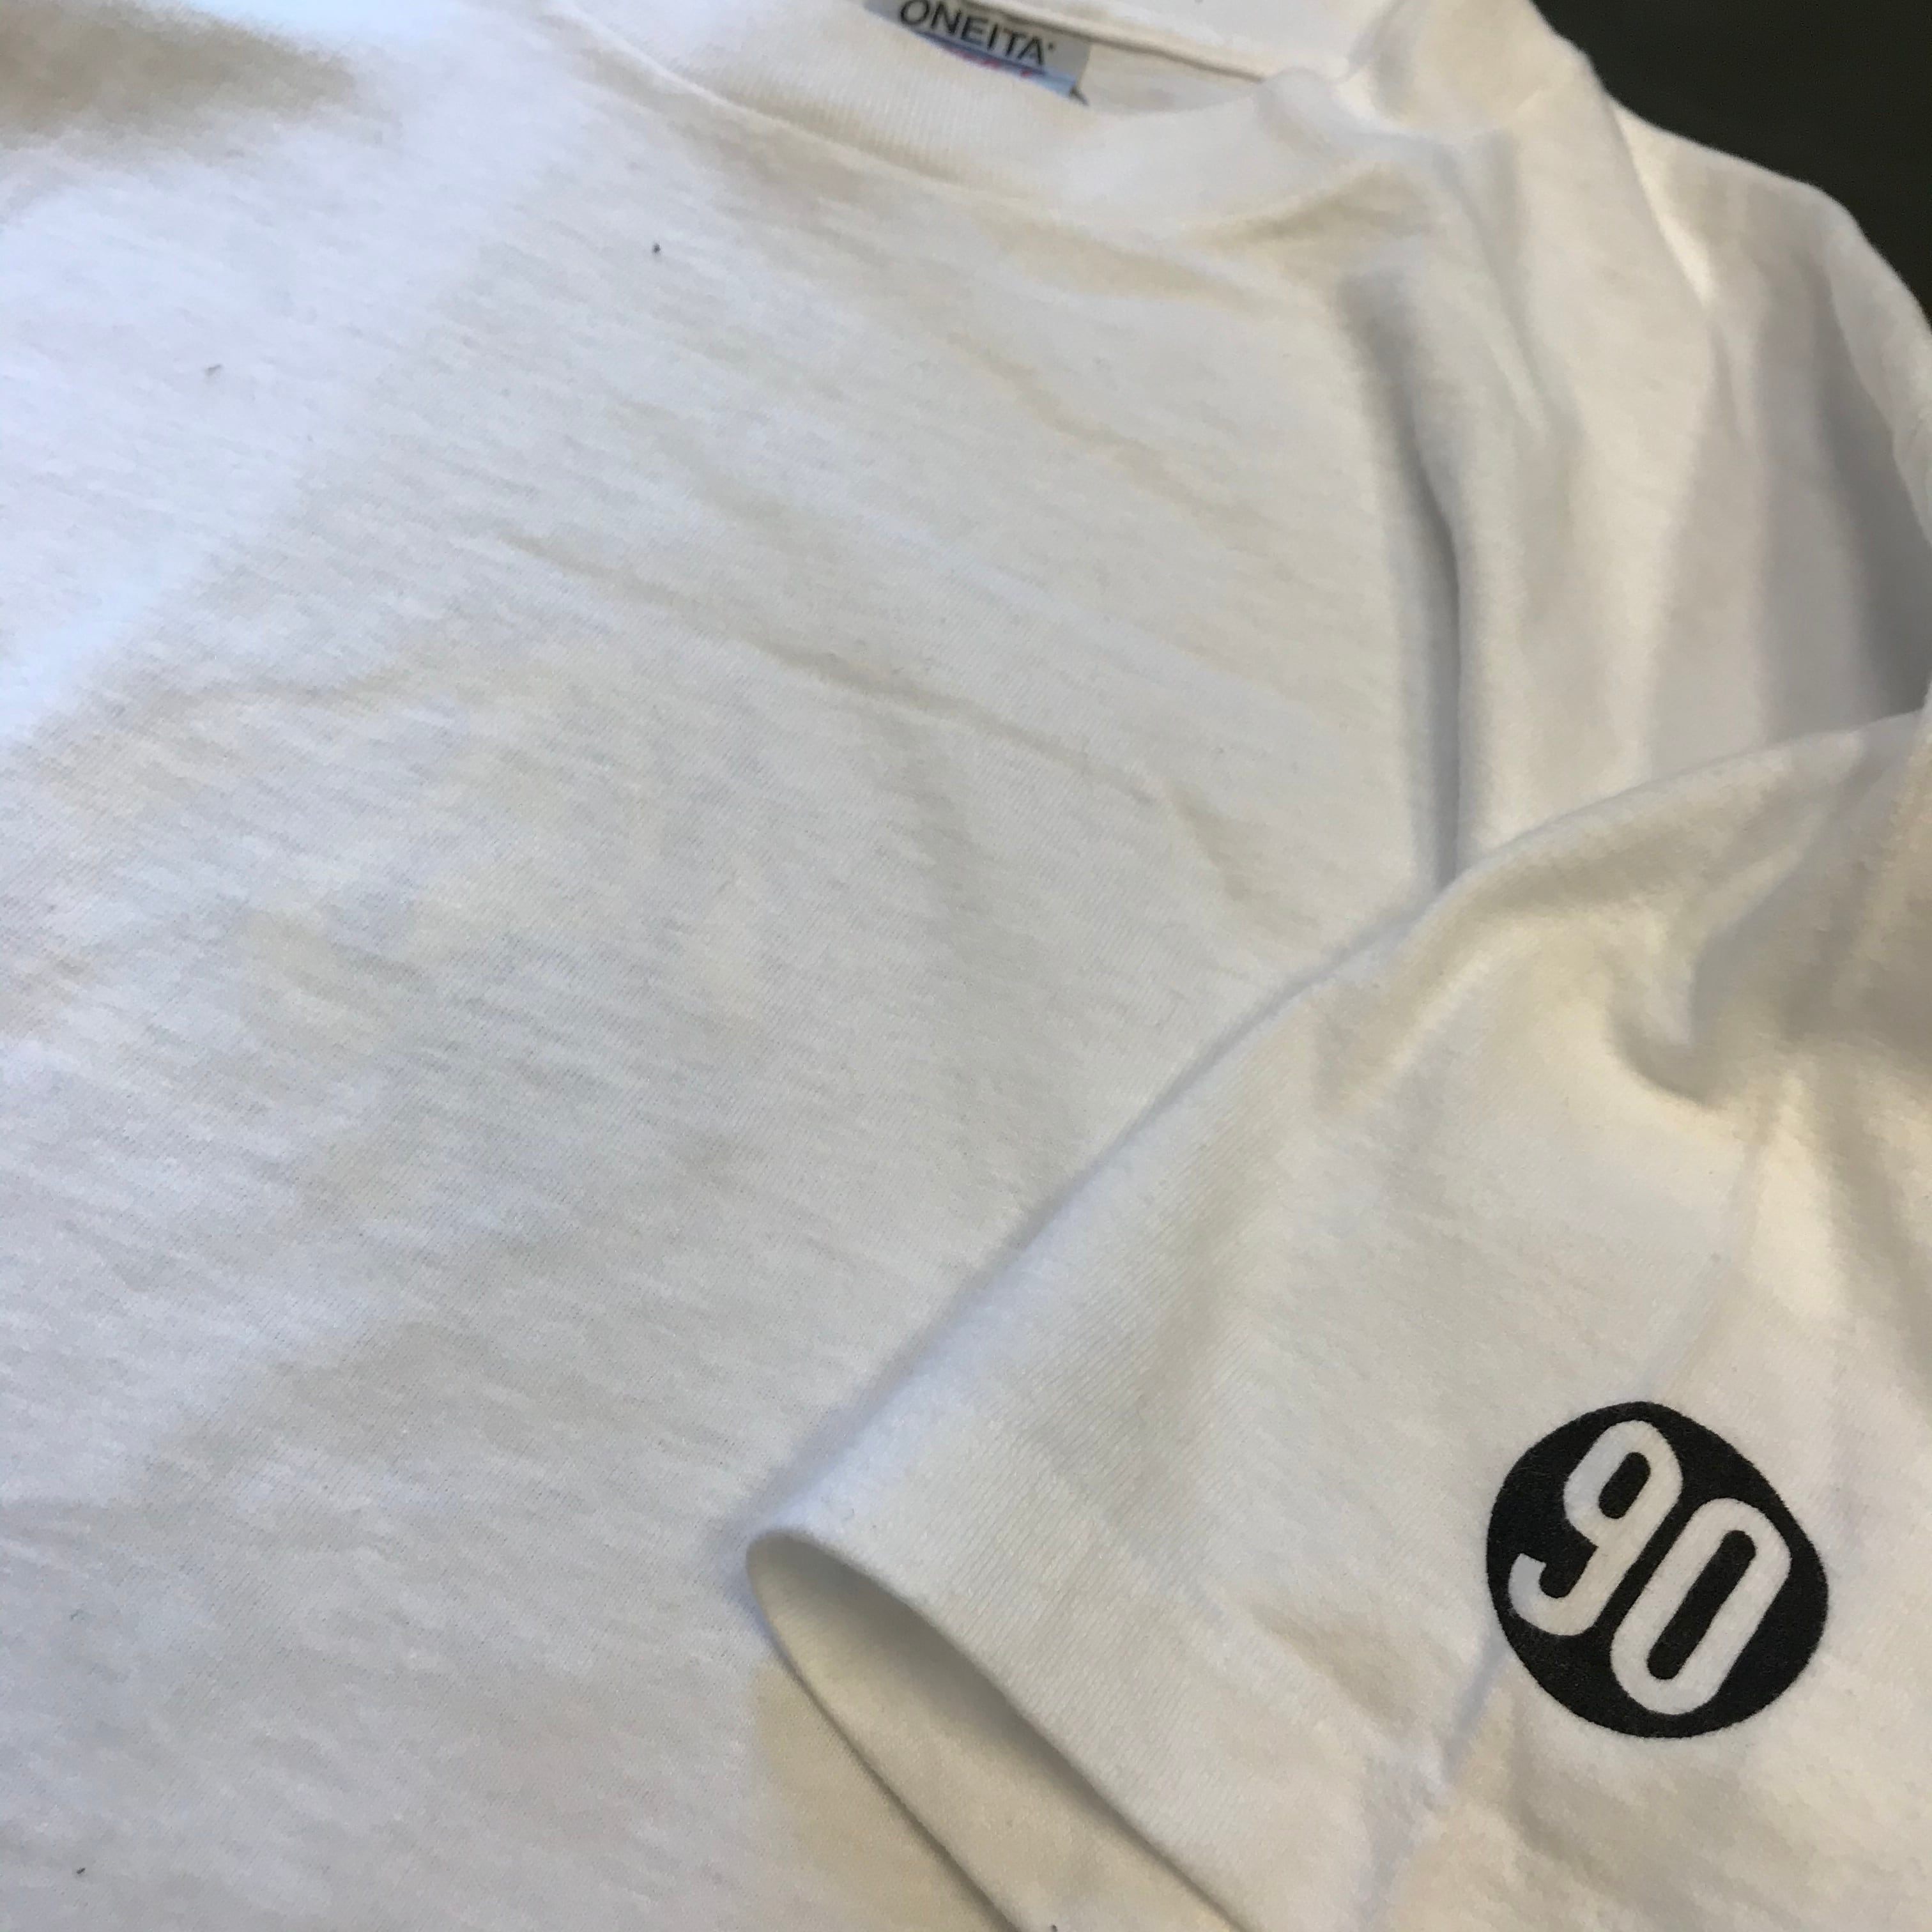 90's Ninety “90” old skate T-shirt fabric made in usa | SKIPSKIP